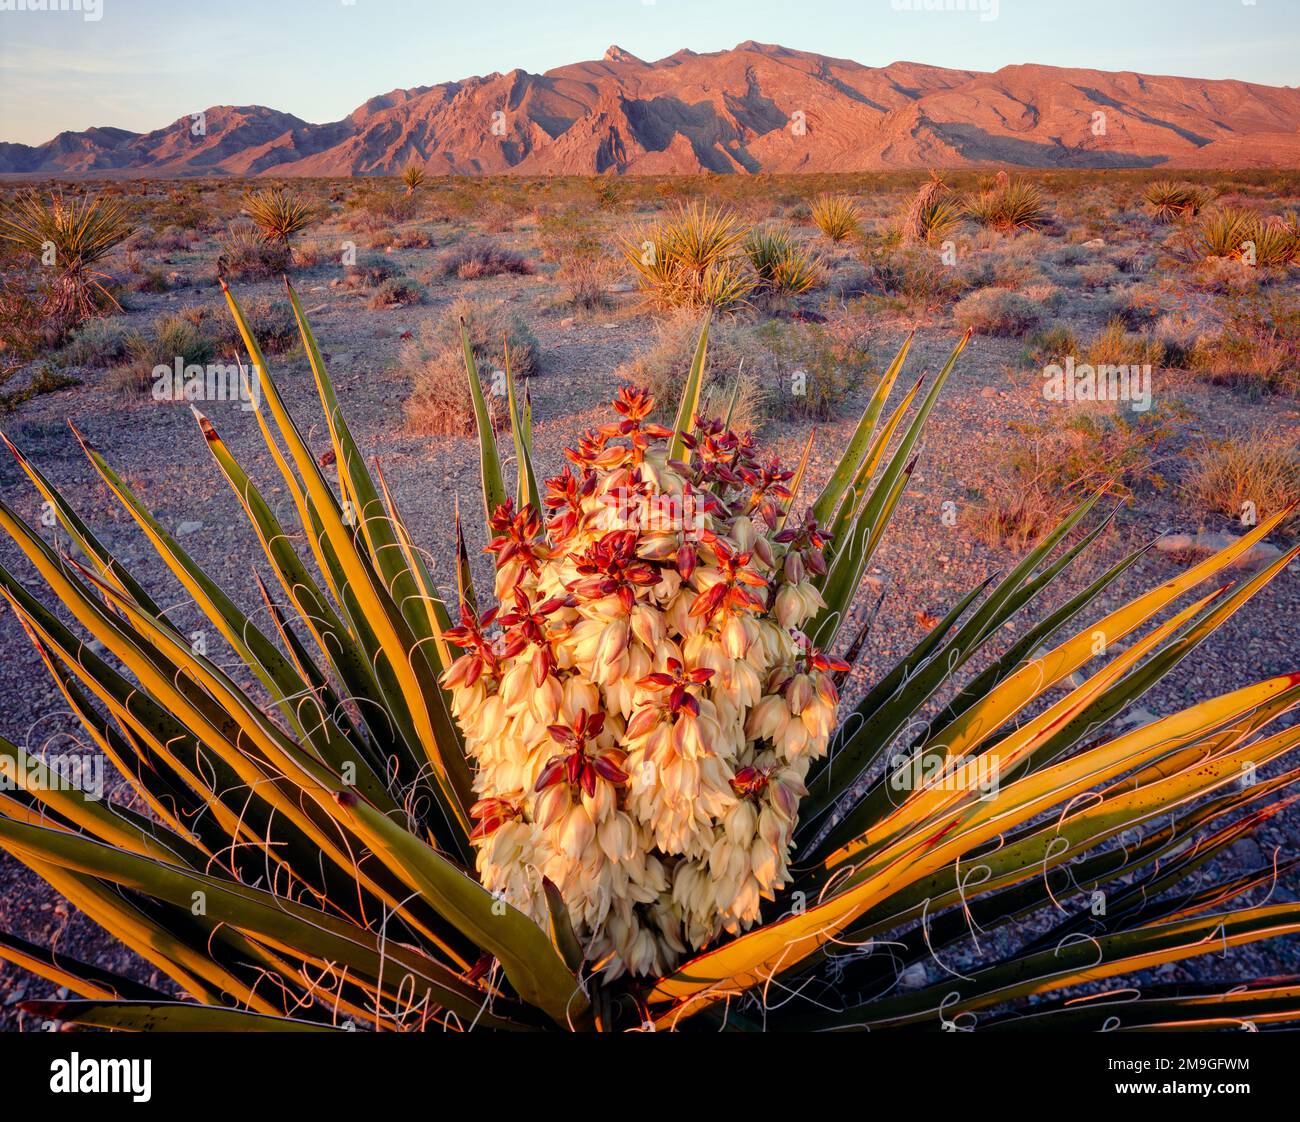 Yucca (Yucca schidigera) pianta nel deserto e Virgin Mountains sullo sfondo, Gold Butte National Monument, Virgin Valley, Nevada, USA Foto Stock